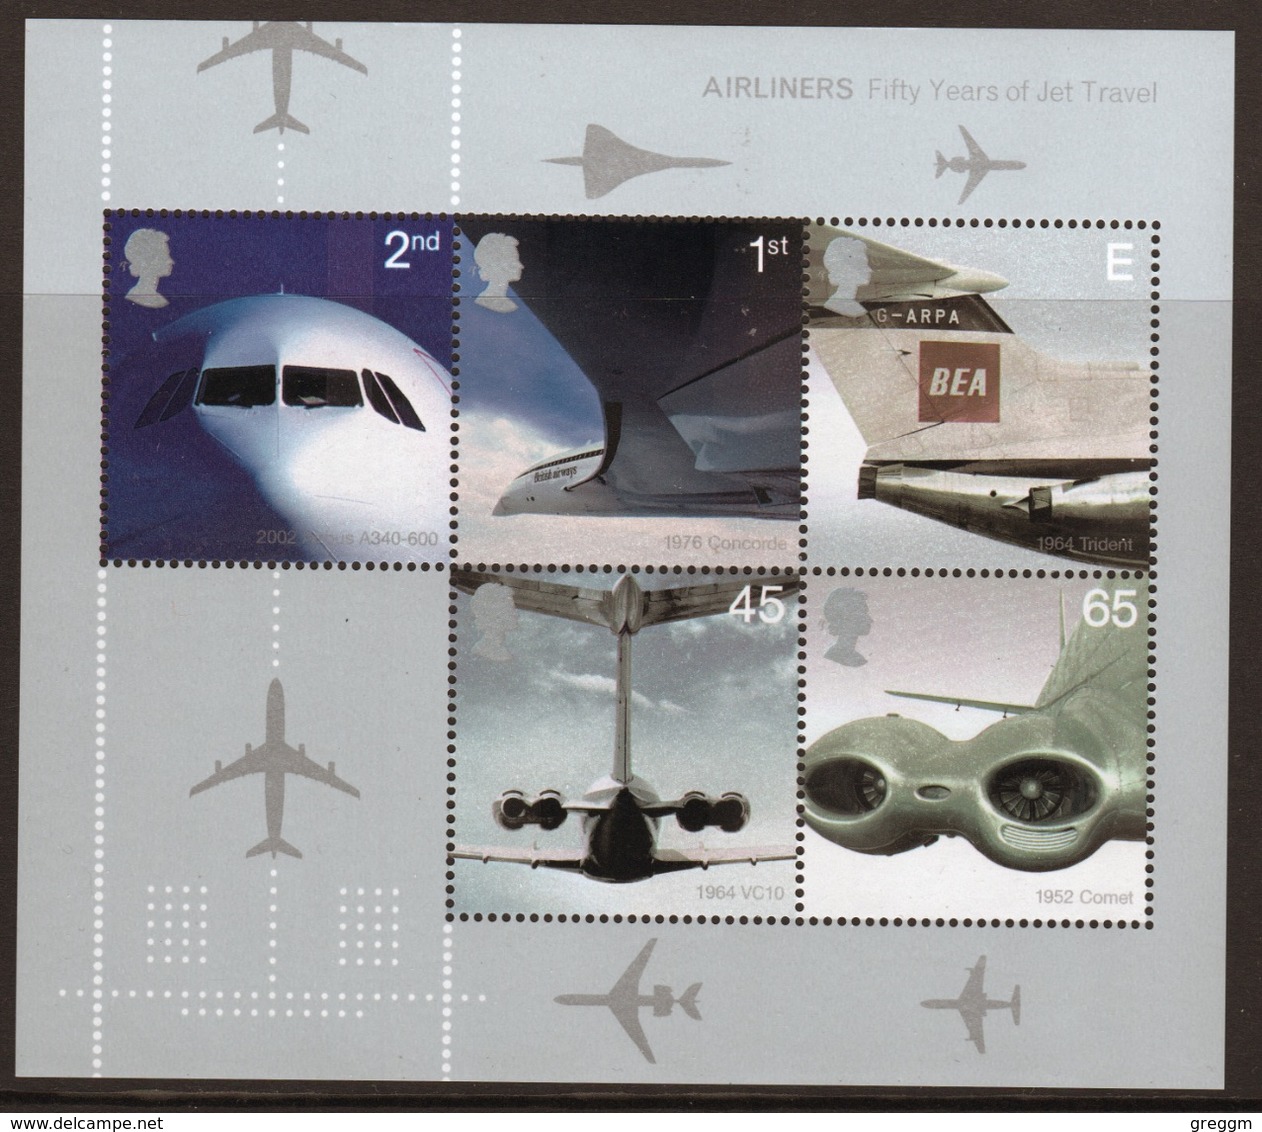 GB 2002 Mini Sheet Celebrating The 50th Anniversary Of Passenger Jet Aviation In Unmounted Mint Condition. - Blocks & Kleinbögen